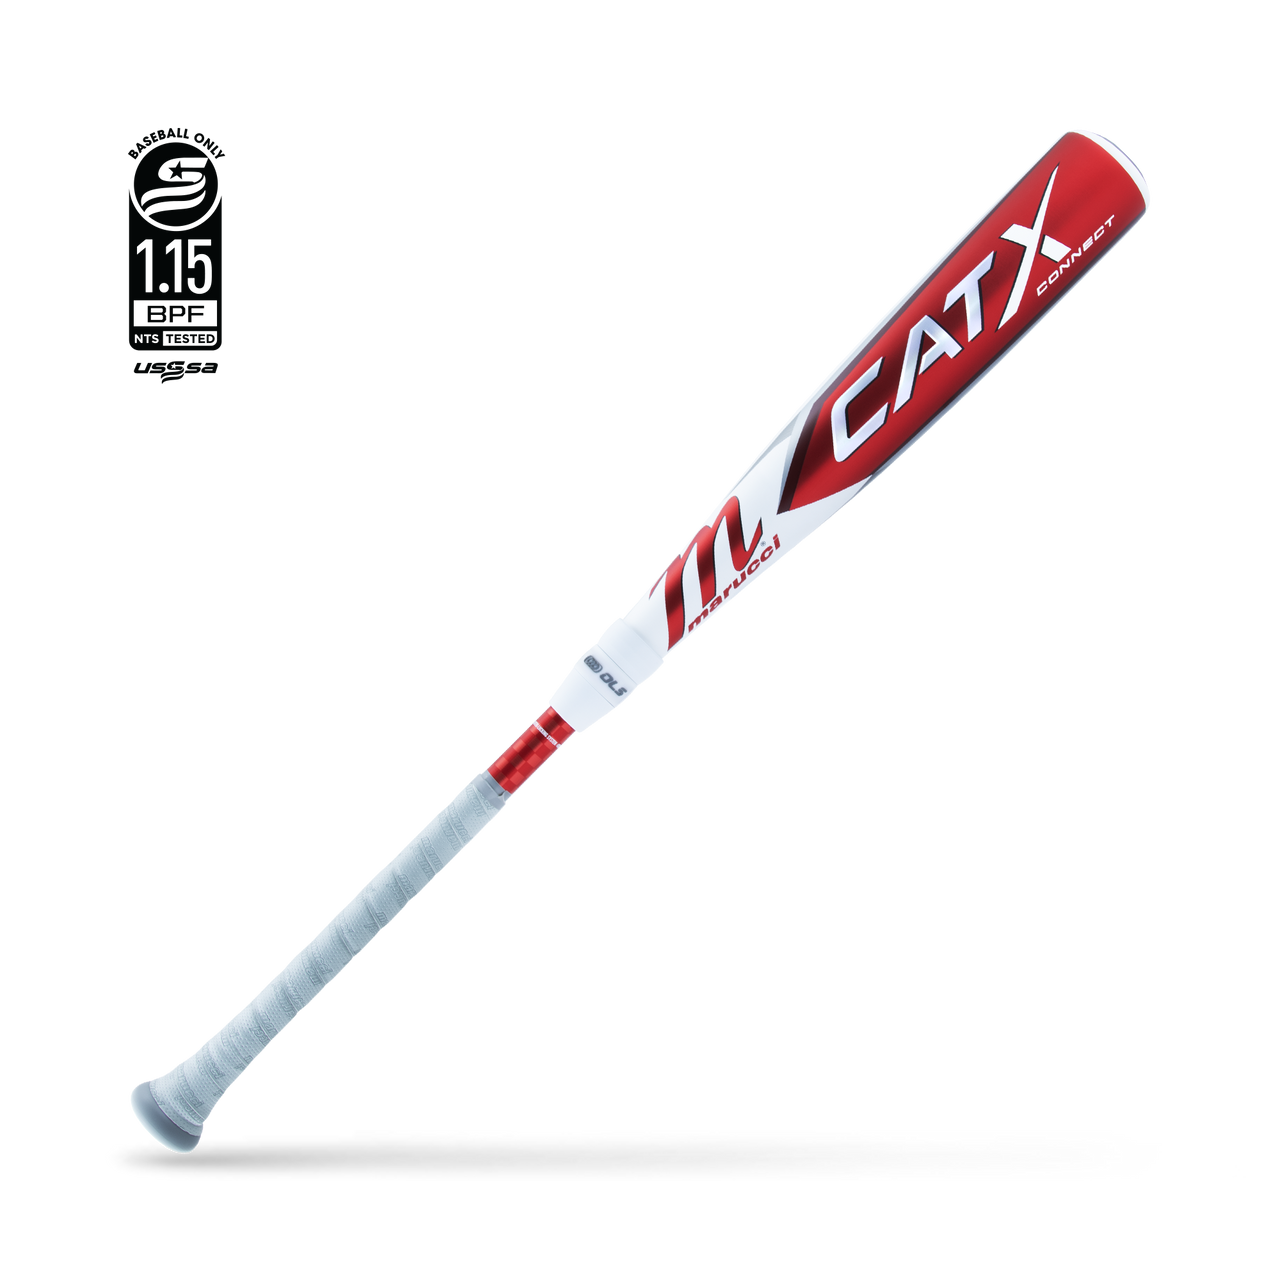 Marucci CATX CONNECT SL (-5) Baseball Bat (MSBCCX5)